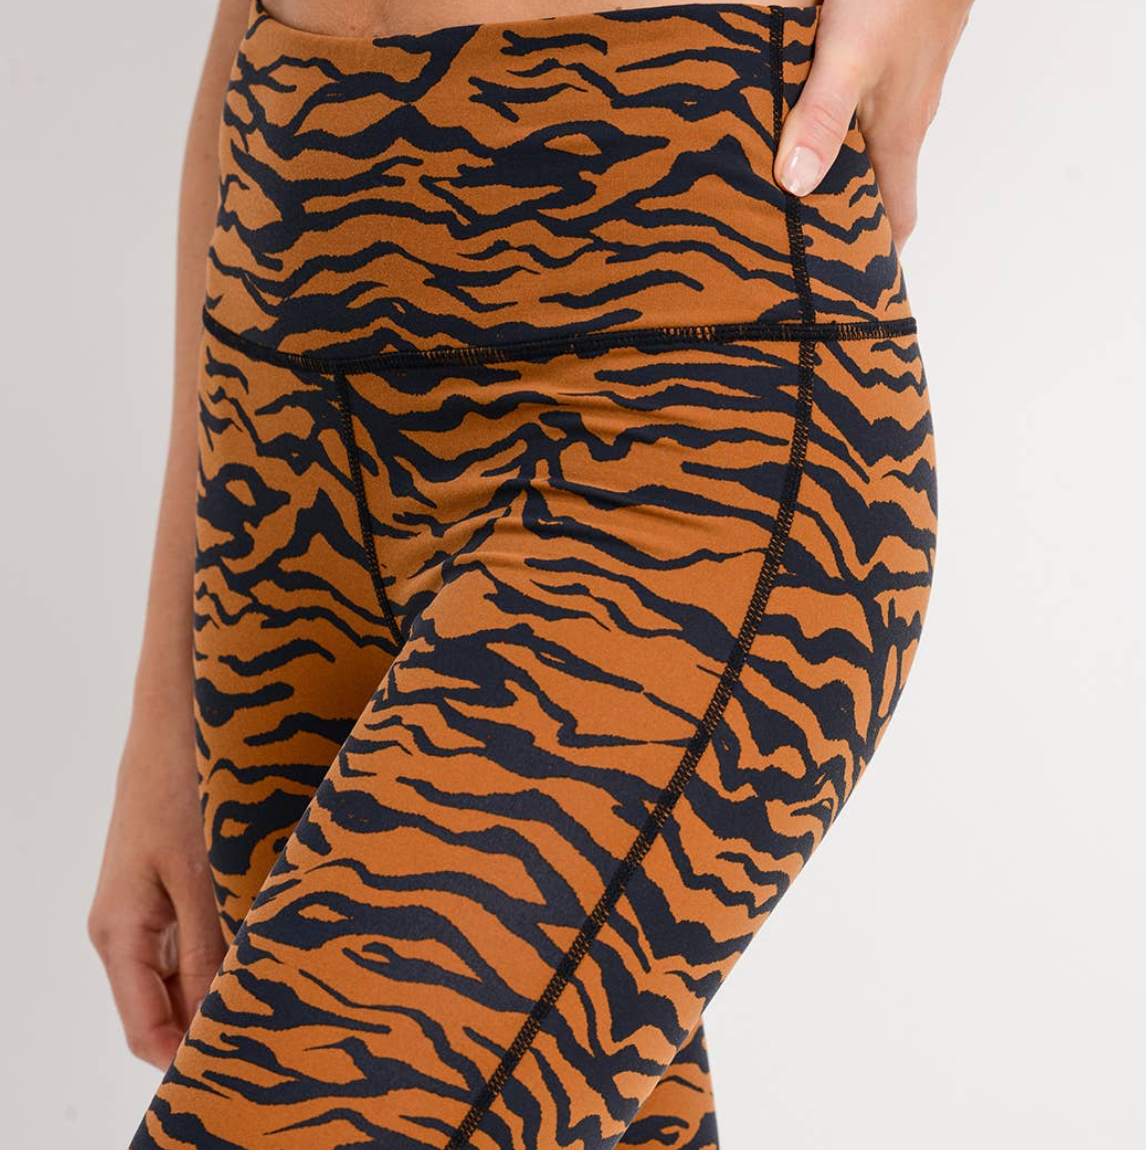 Tiger Print Leggings by Mono B